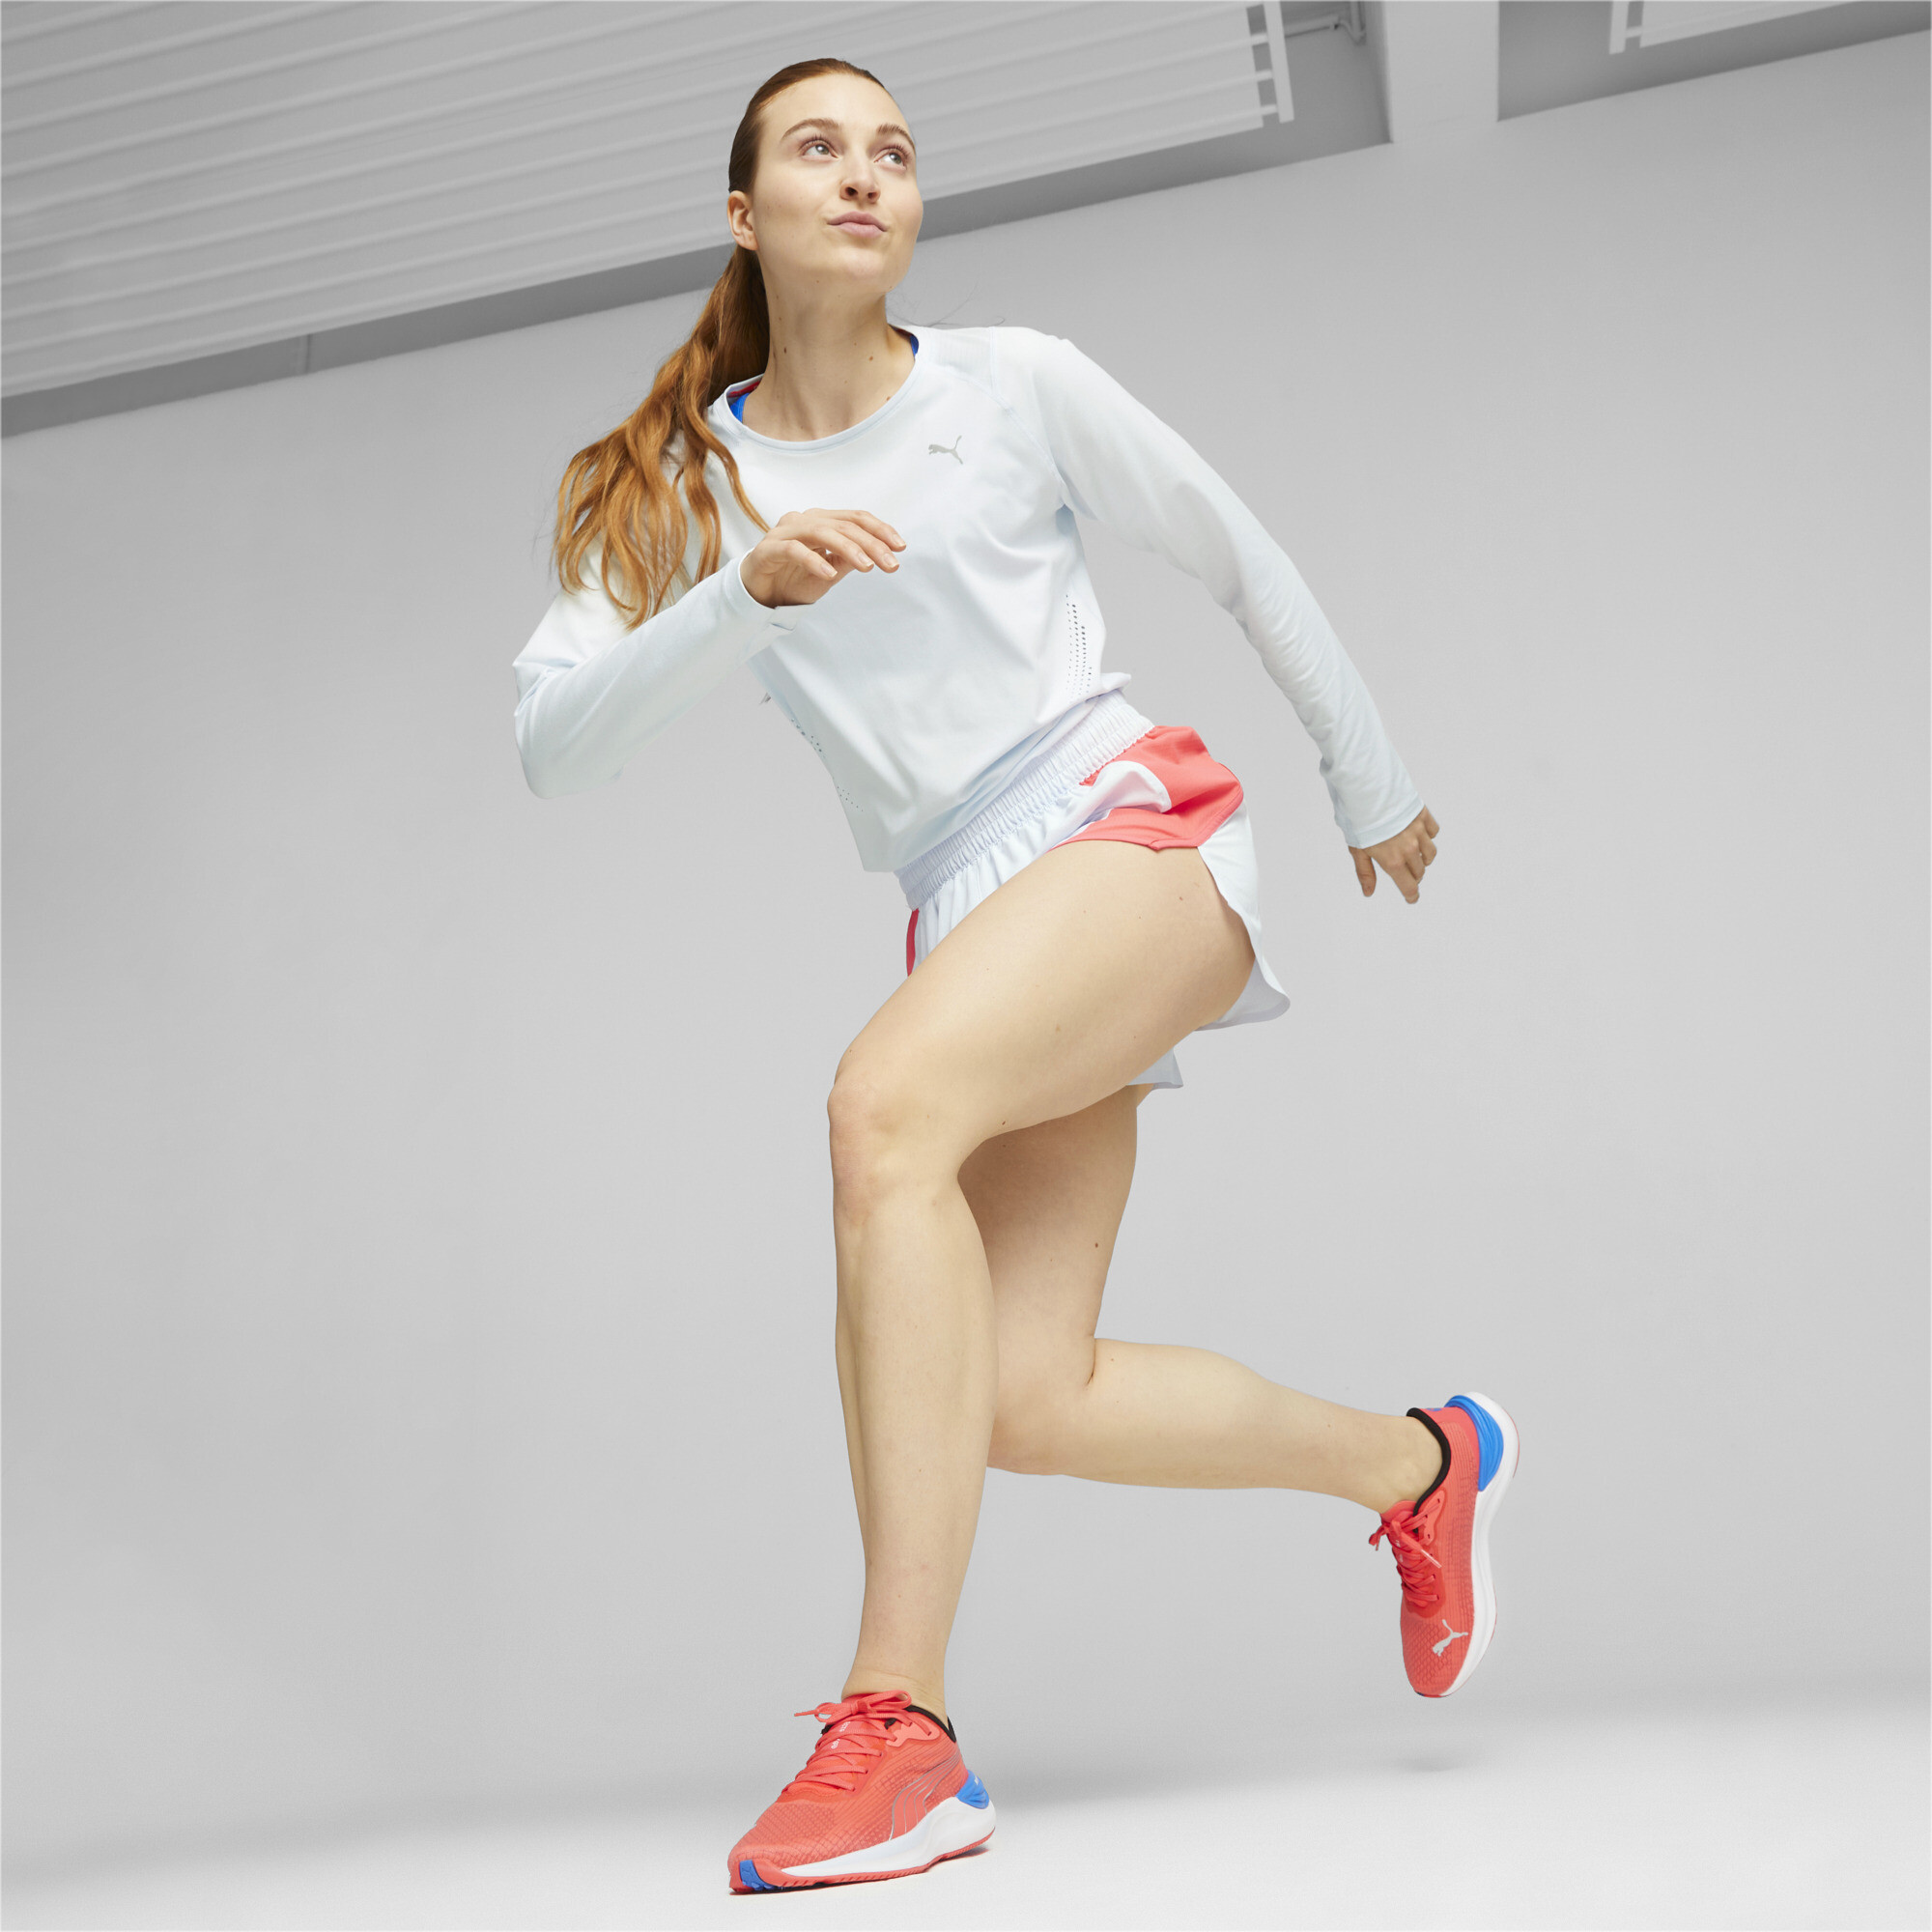 Women's PUMA Electrify NITROâ¢ 3 Running Shoes In Red, Size EU 40.5